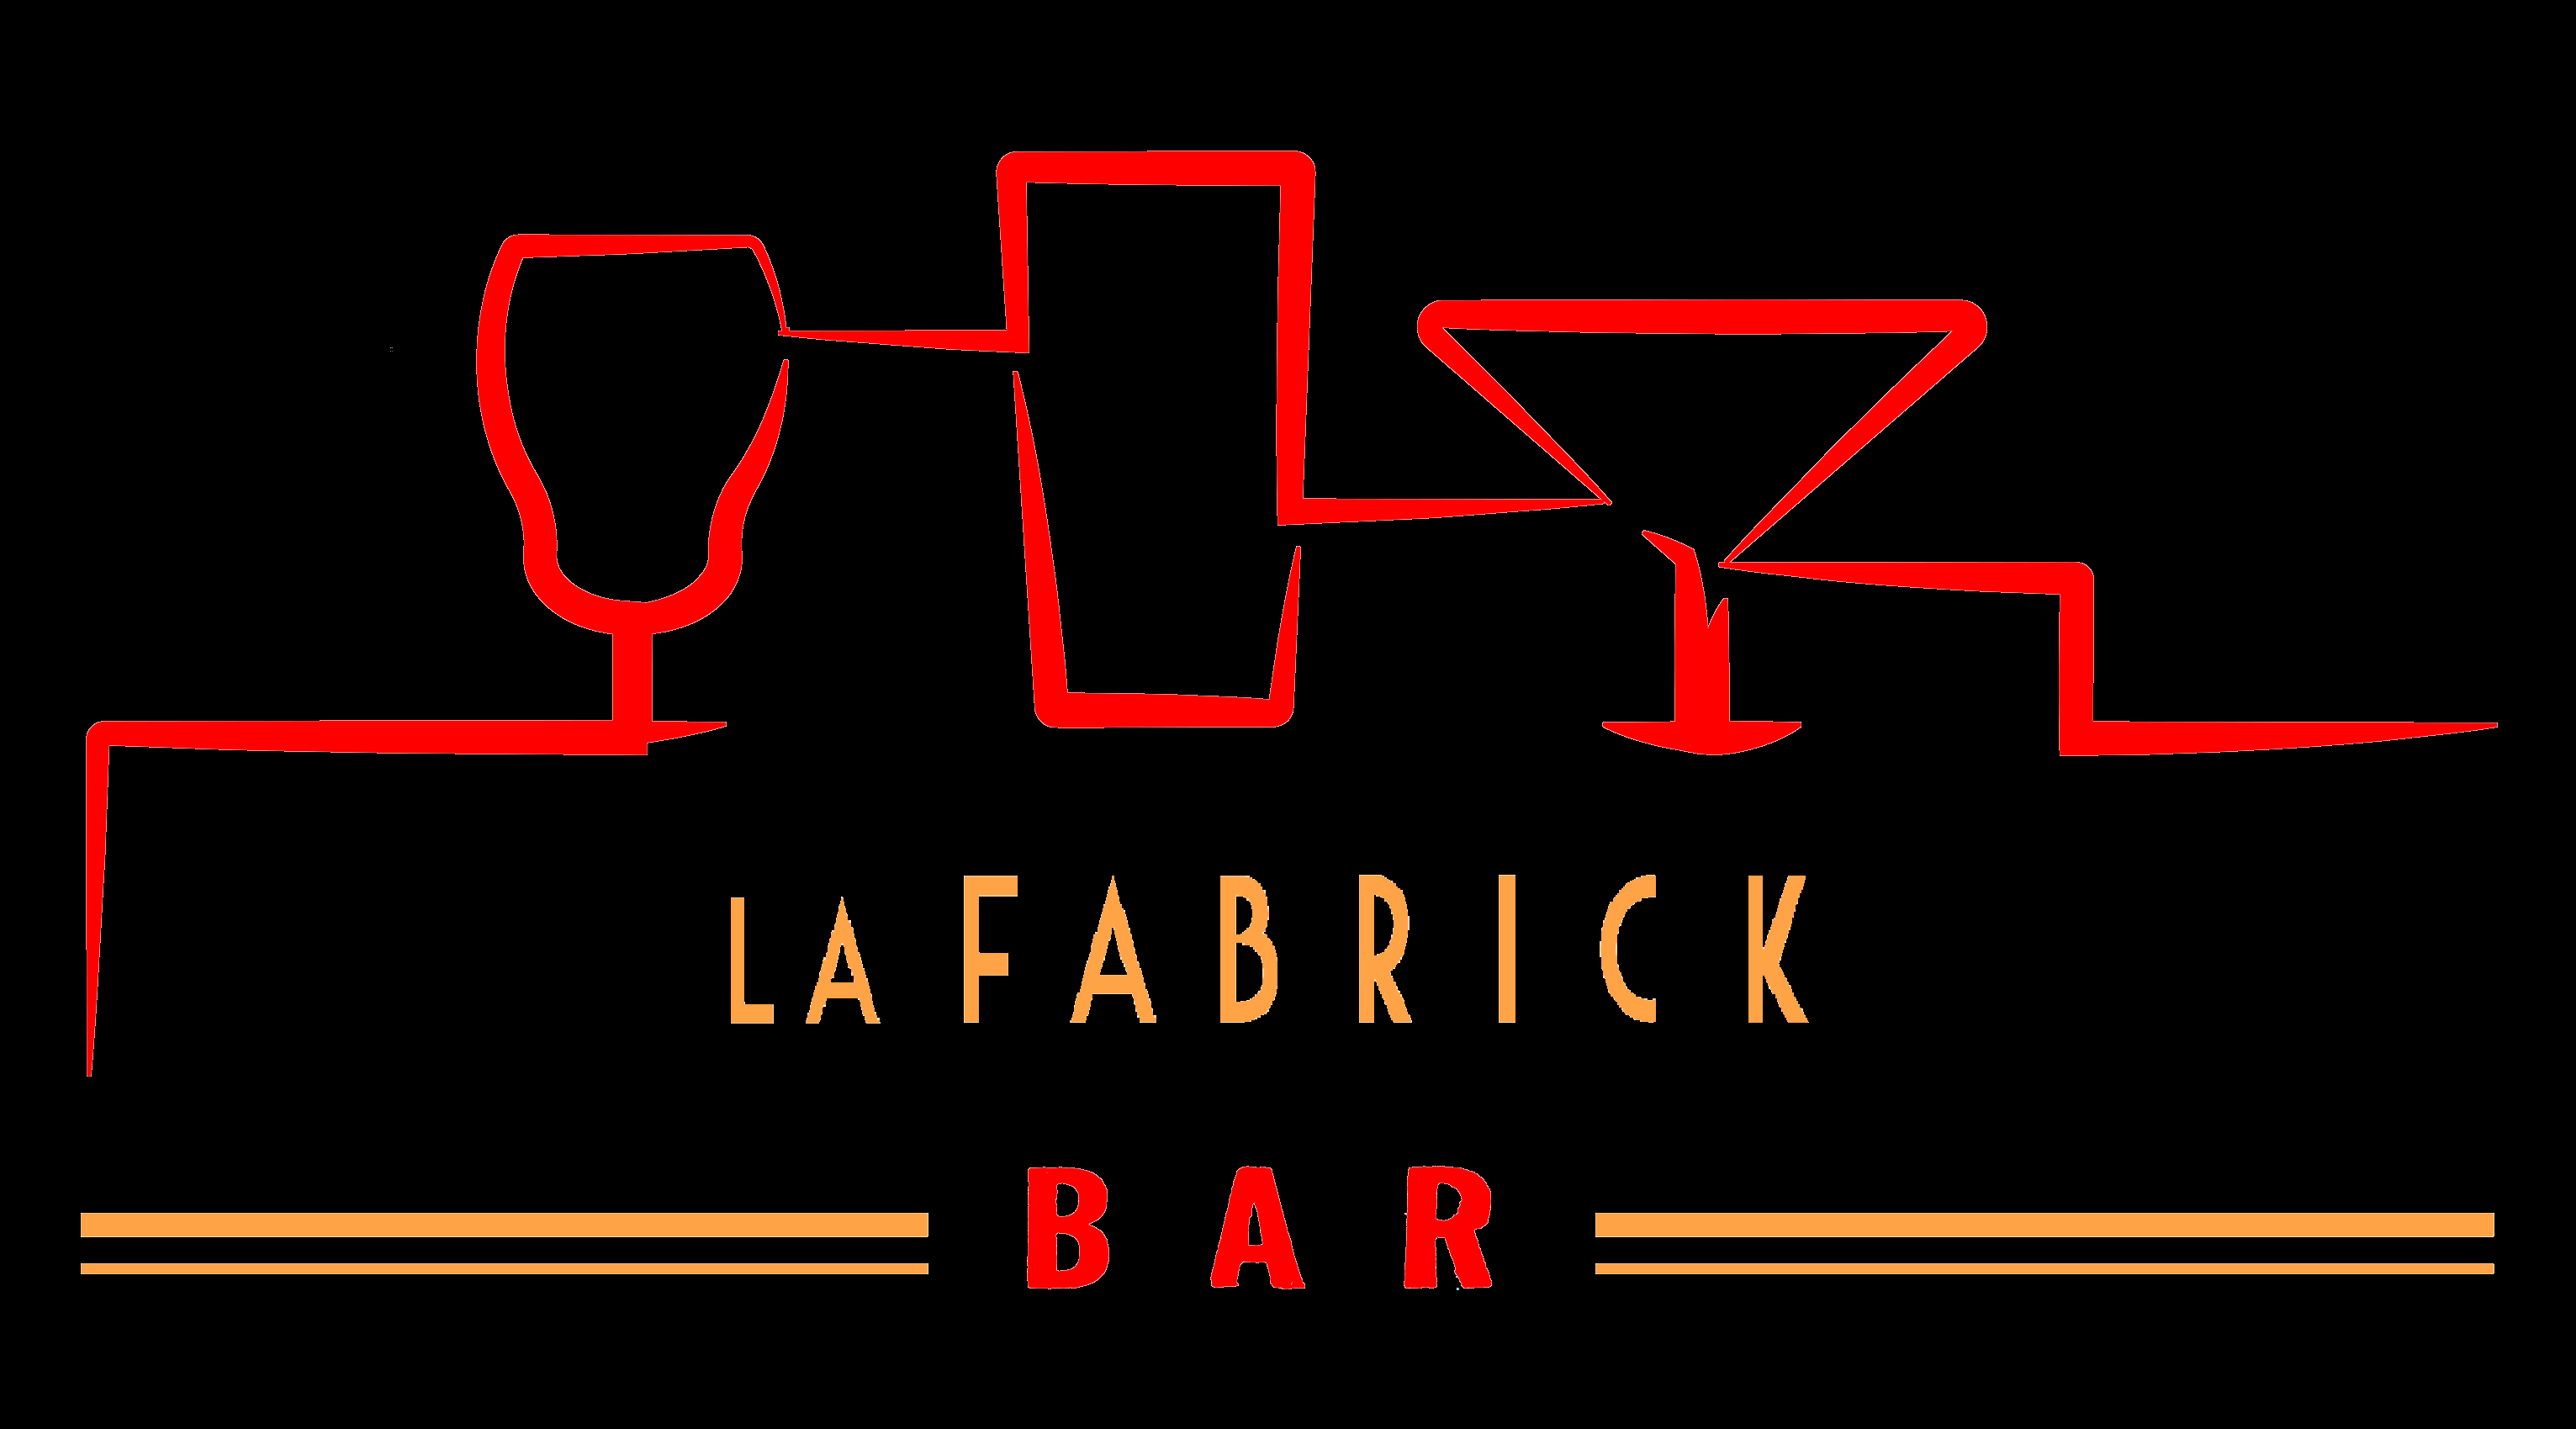 La Fabrick Bar